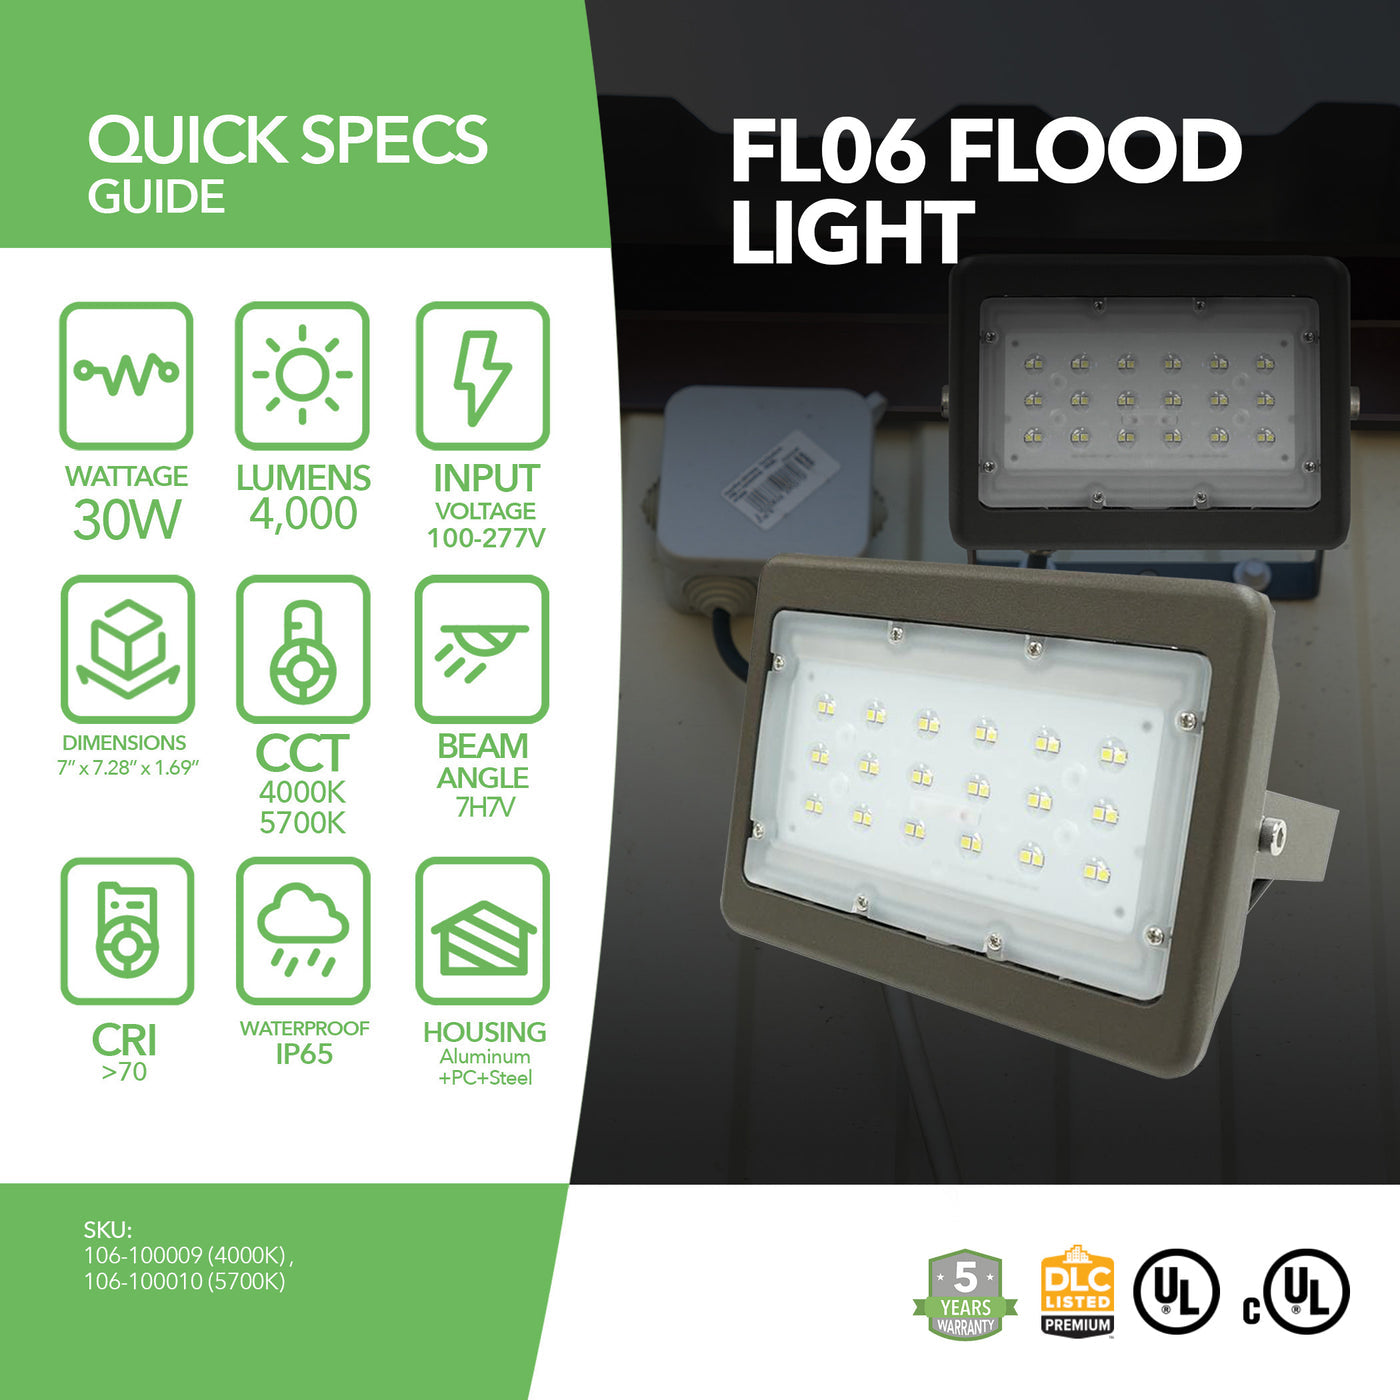 30W LED Flood Light, Landscape Light, Landscape Light - (UL+DLC) - 5 Year Warranty